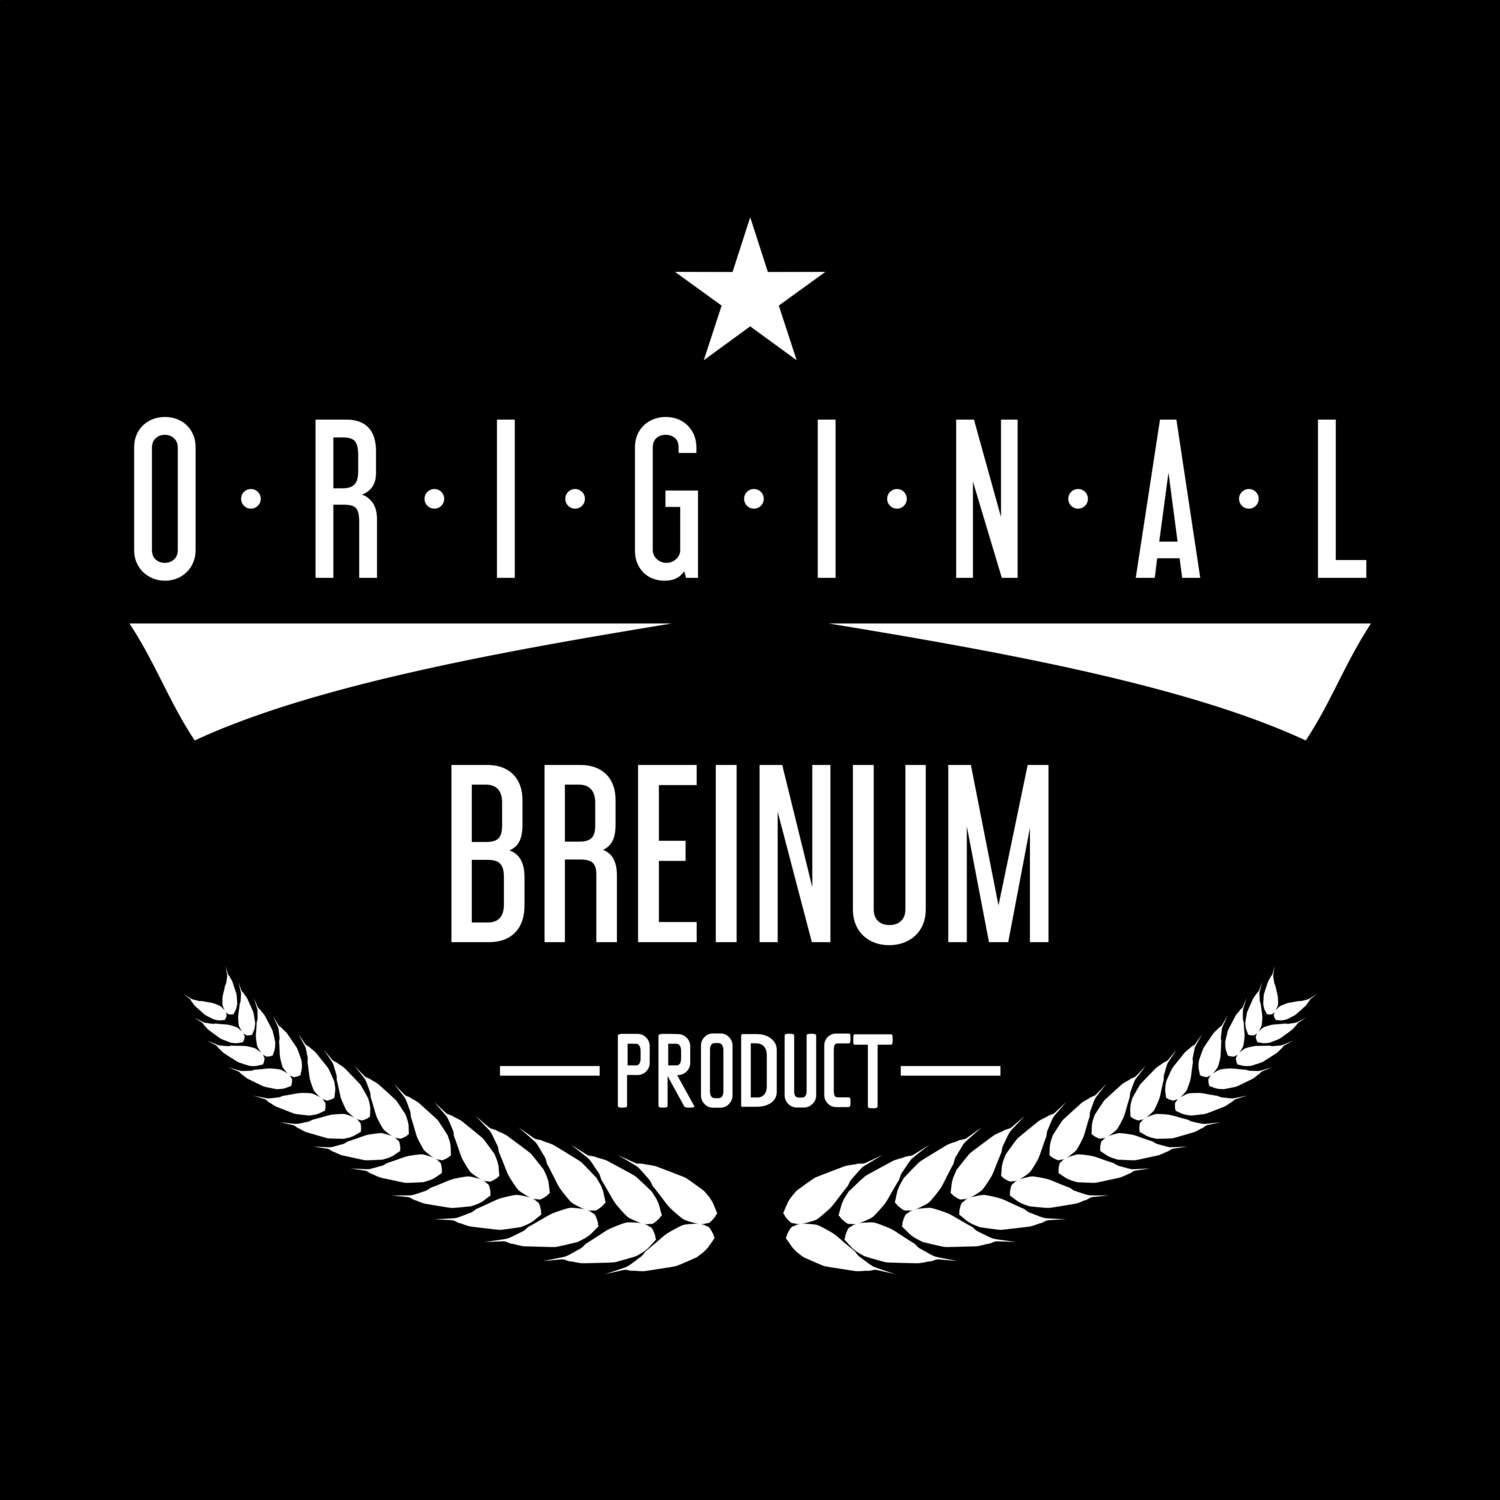 Breinum T-Shirt »Original Product«